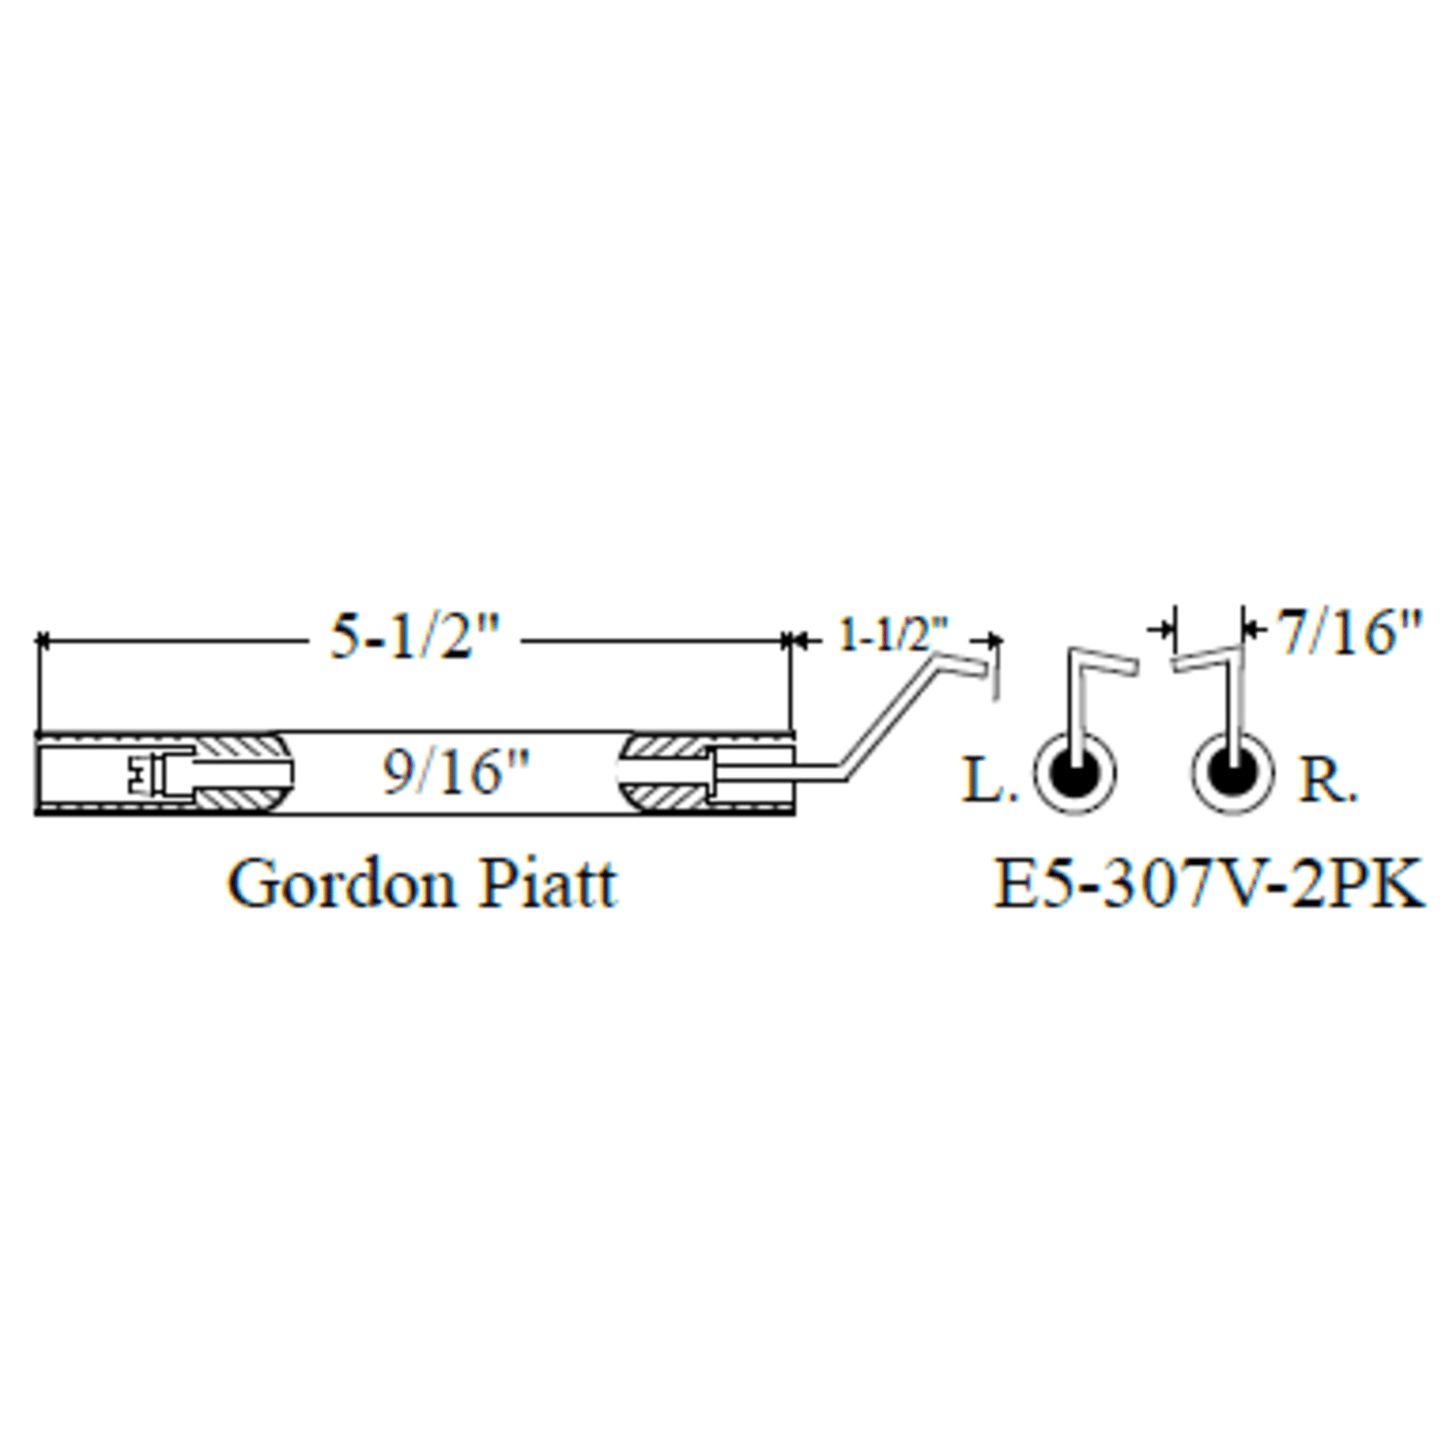 Westwood 307V Gordon Piatt Electrode 2pk